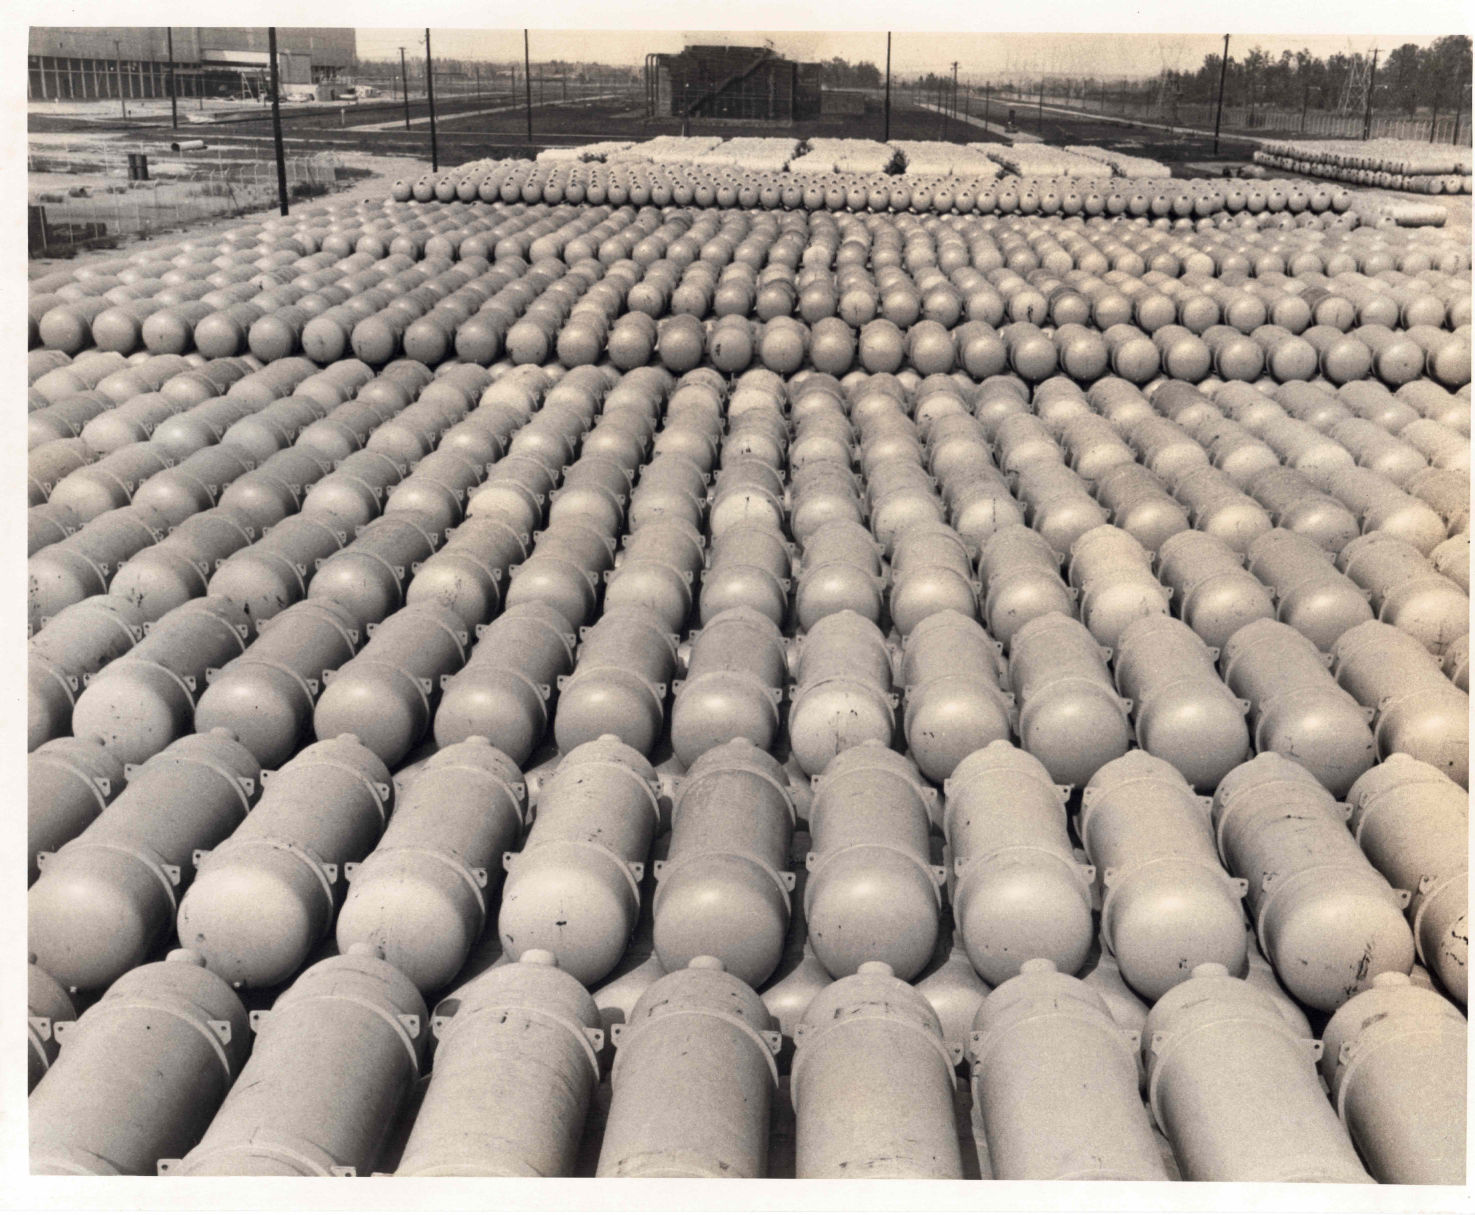 Field of tanks of depleted uranium